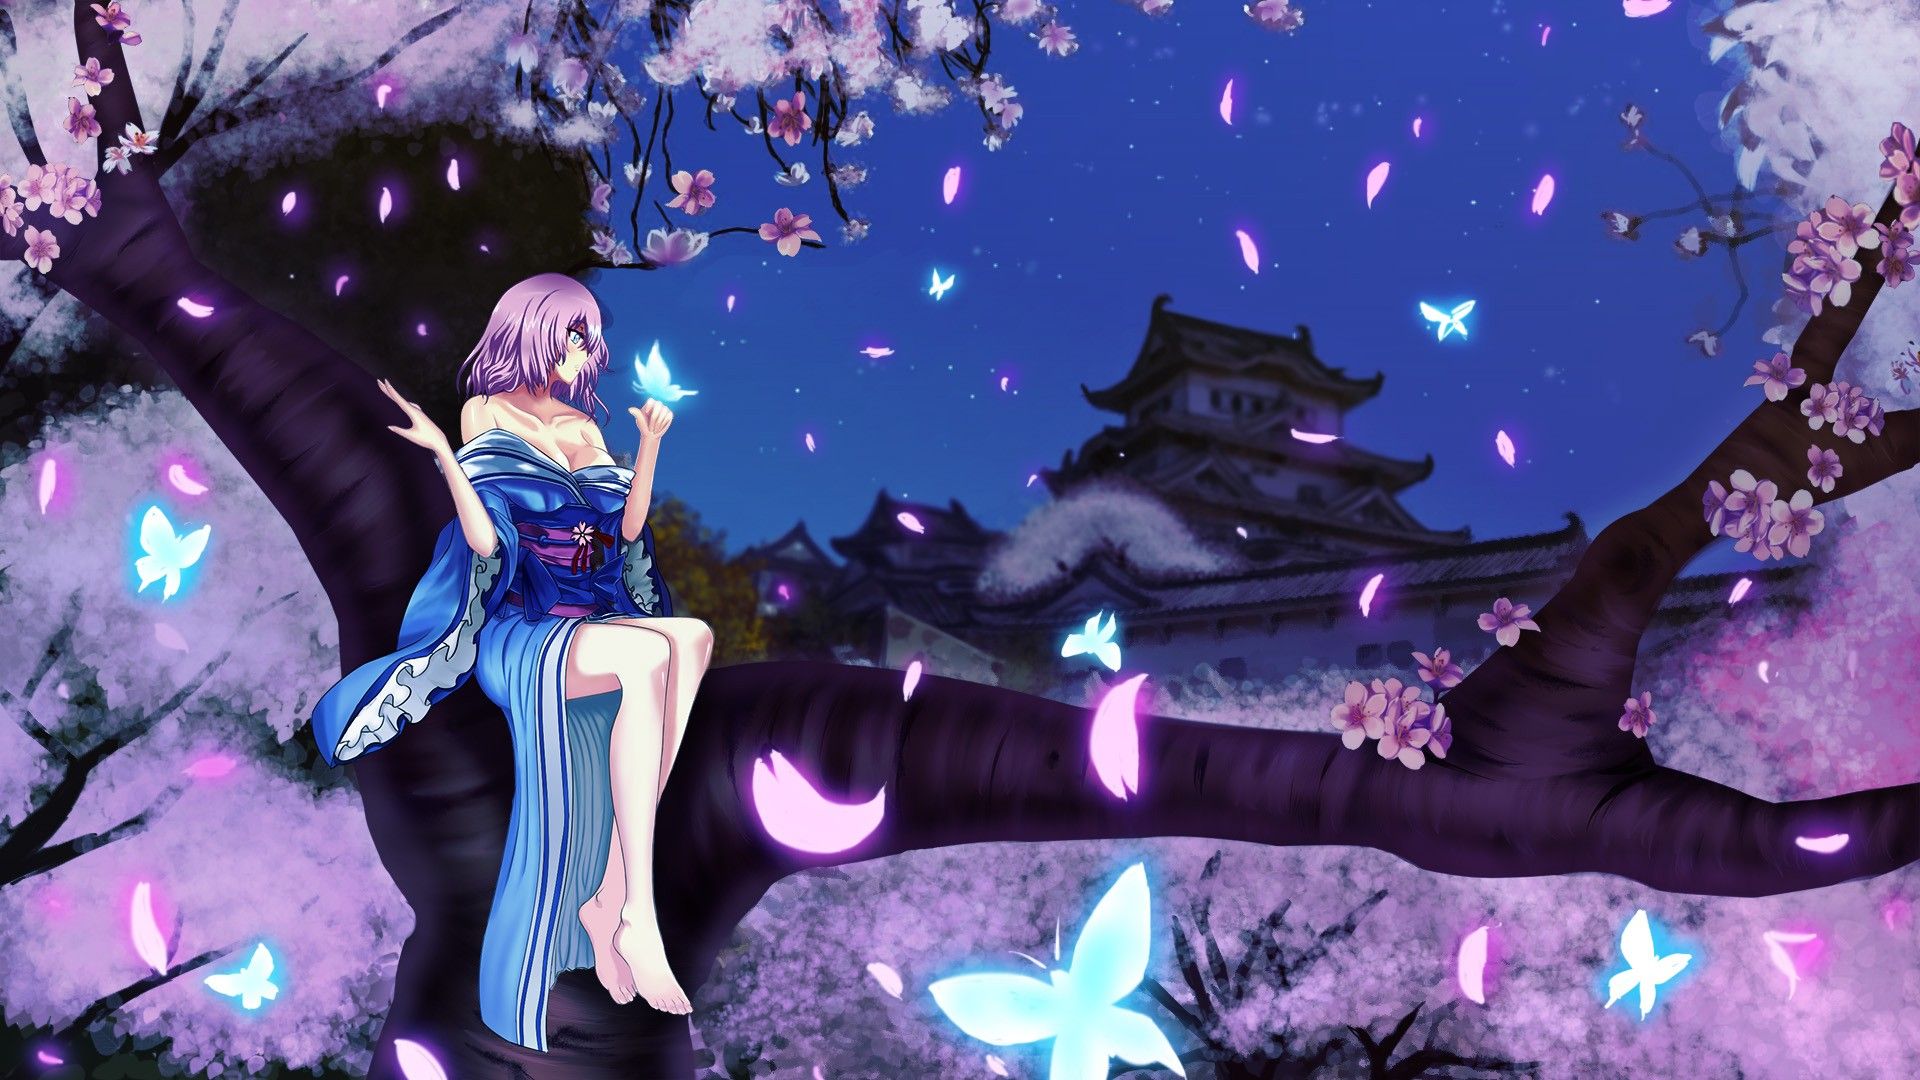 Anime Sakura Trees Hd Wallpapers